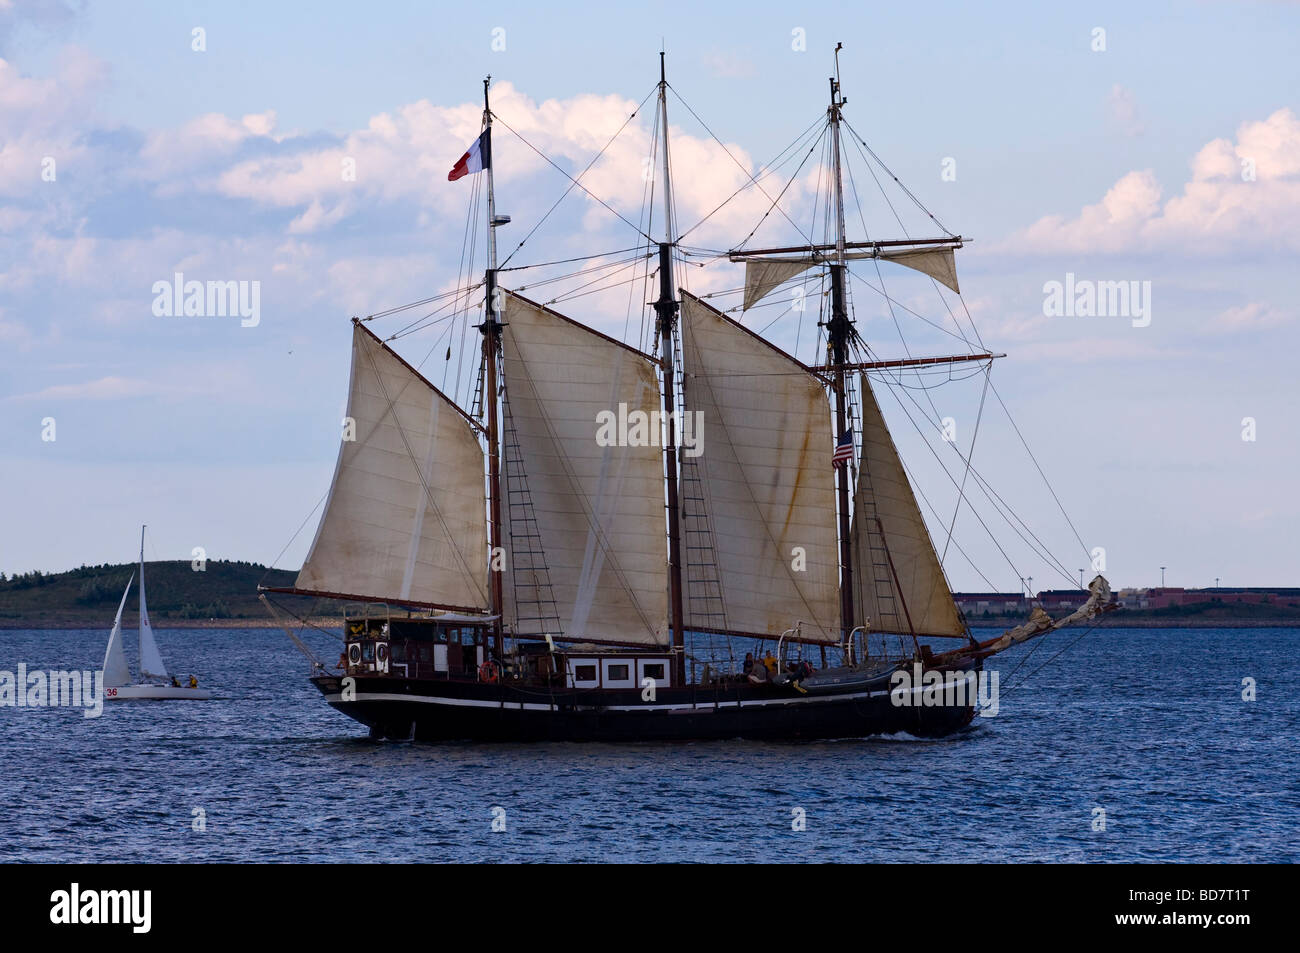 Sail Boston 2009.  French Tall Ship 'Bel Espoir II', a TopSail Schooner sails out of Boston Harbor. Stock Photo